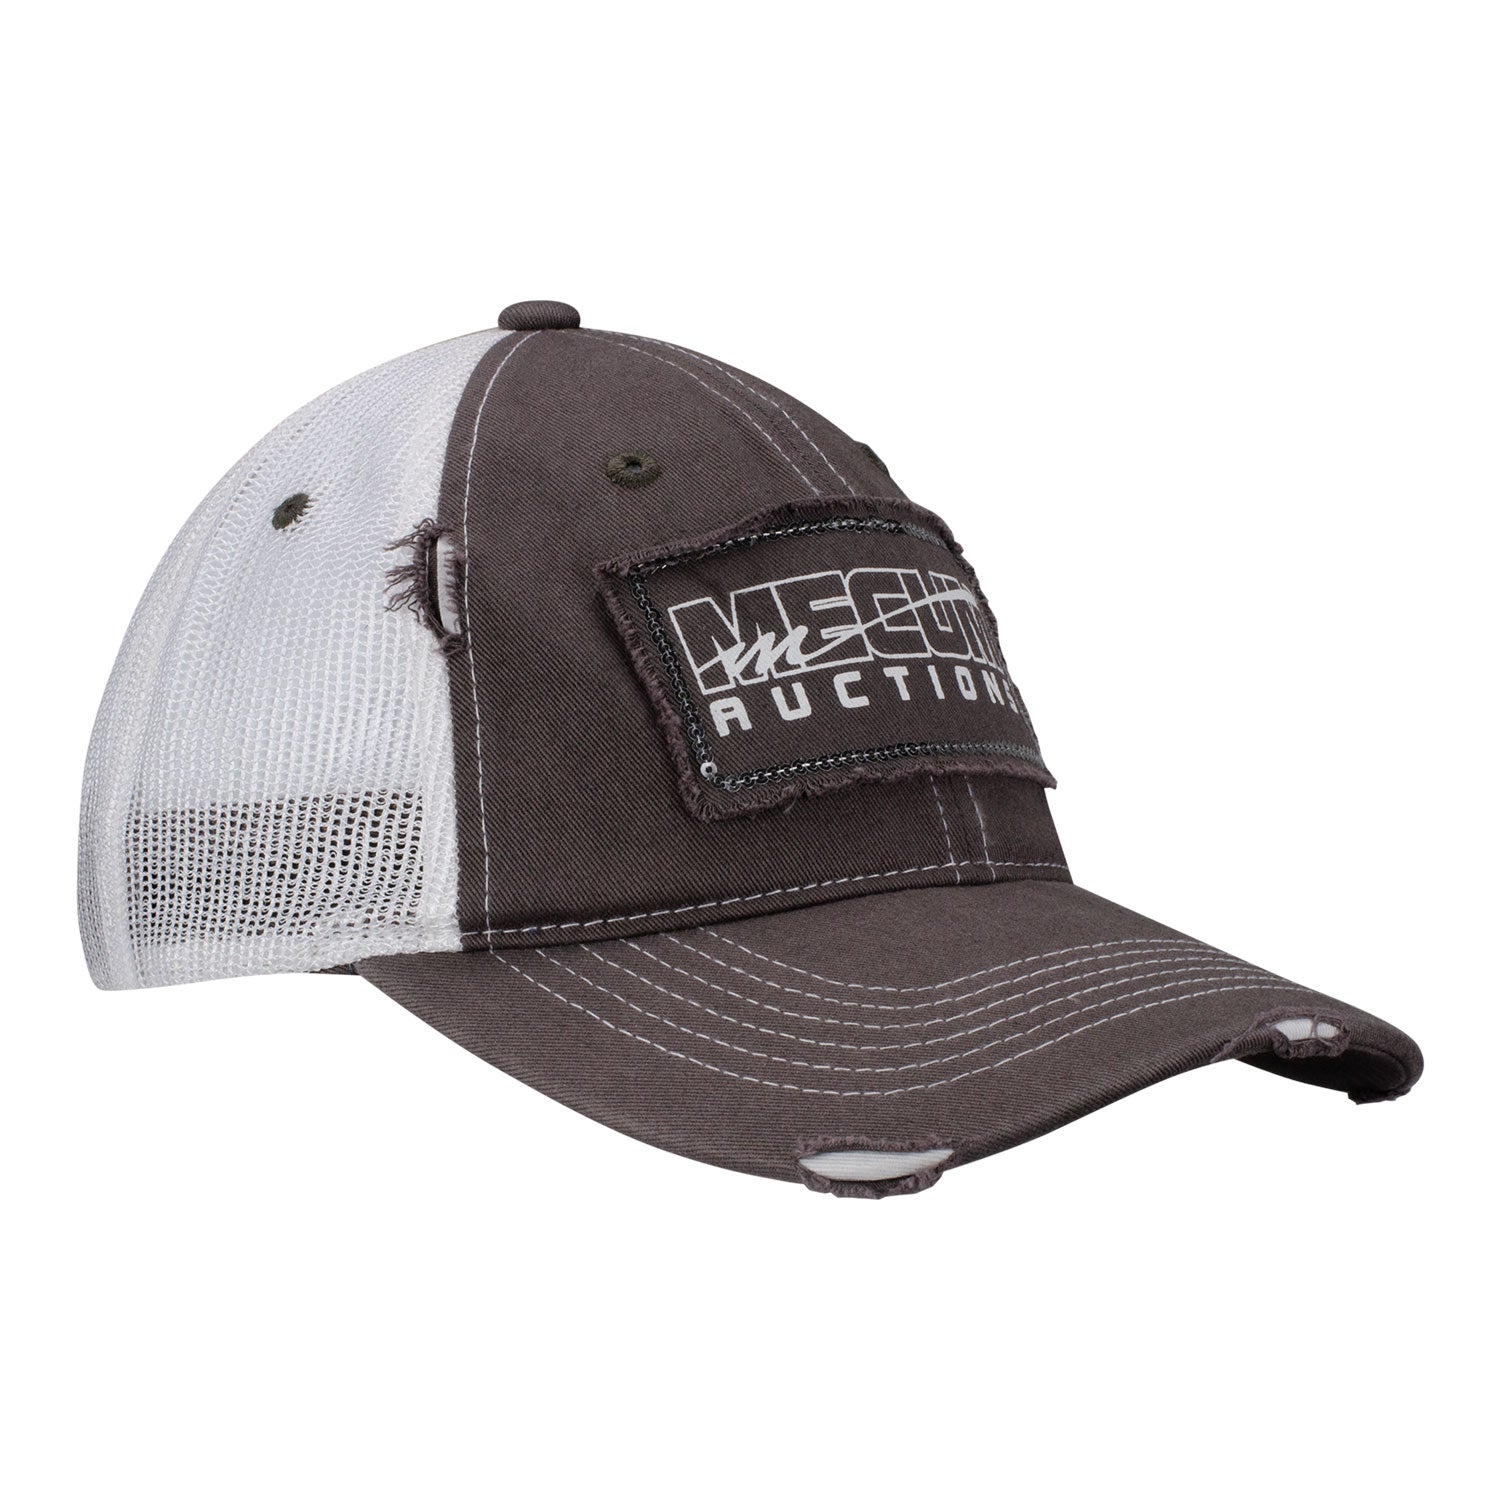 Mecum Auctions Ladies Grey Distressed Mesh Hat - Front View